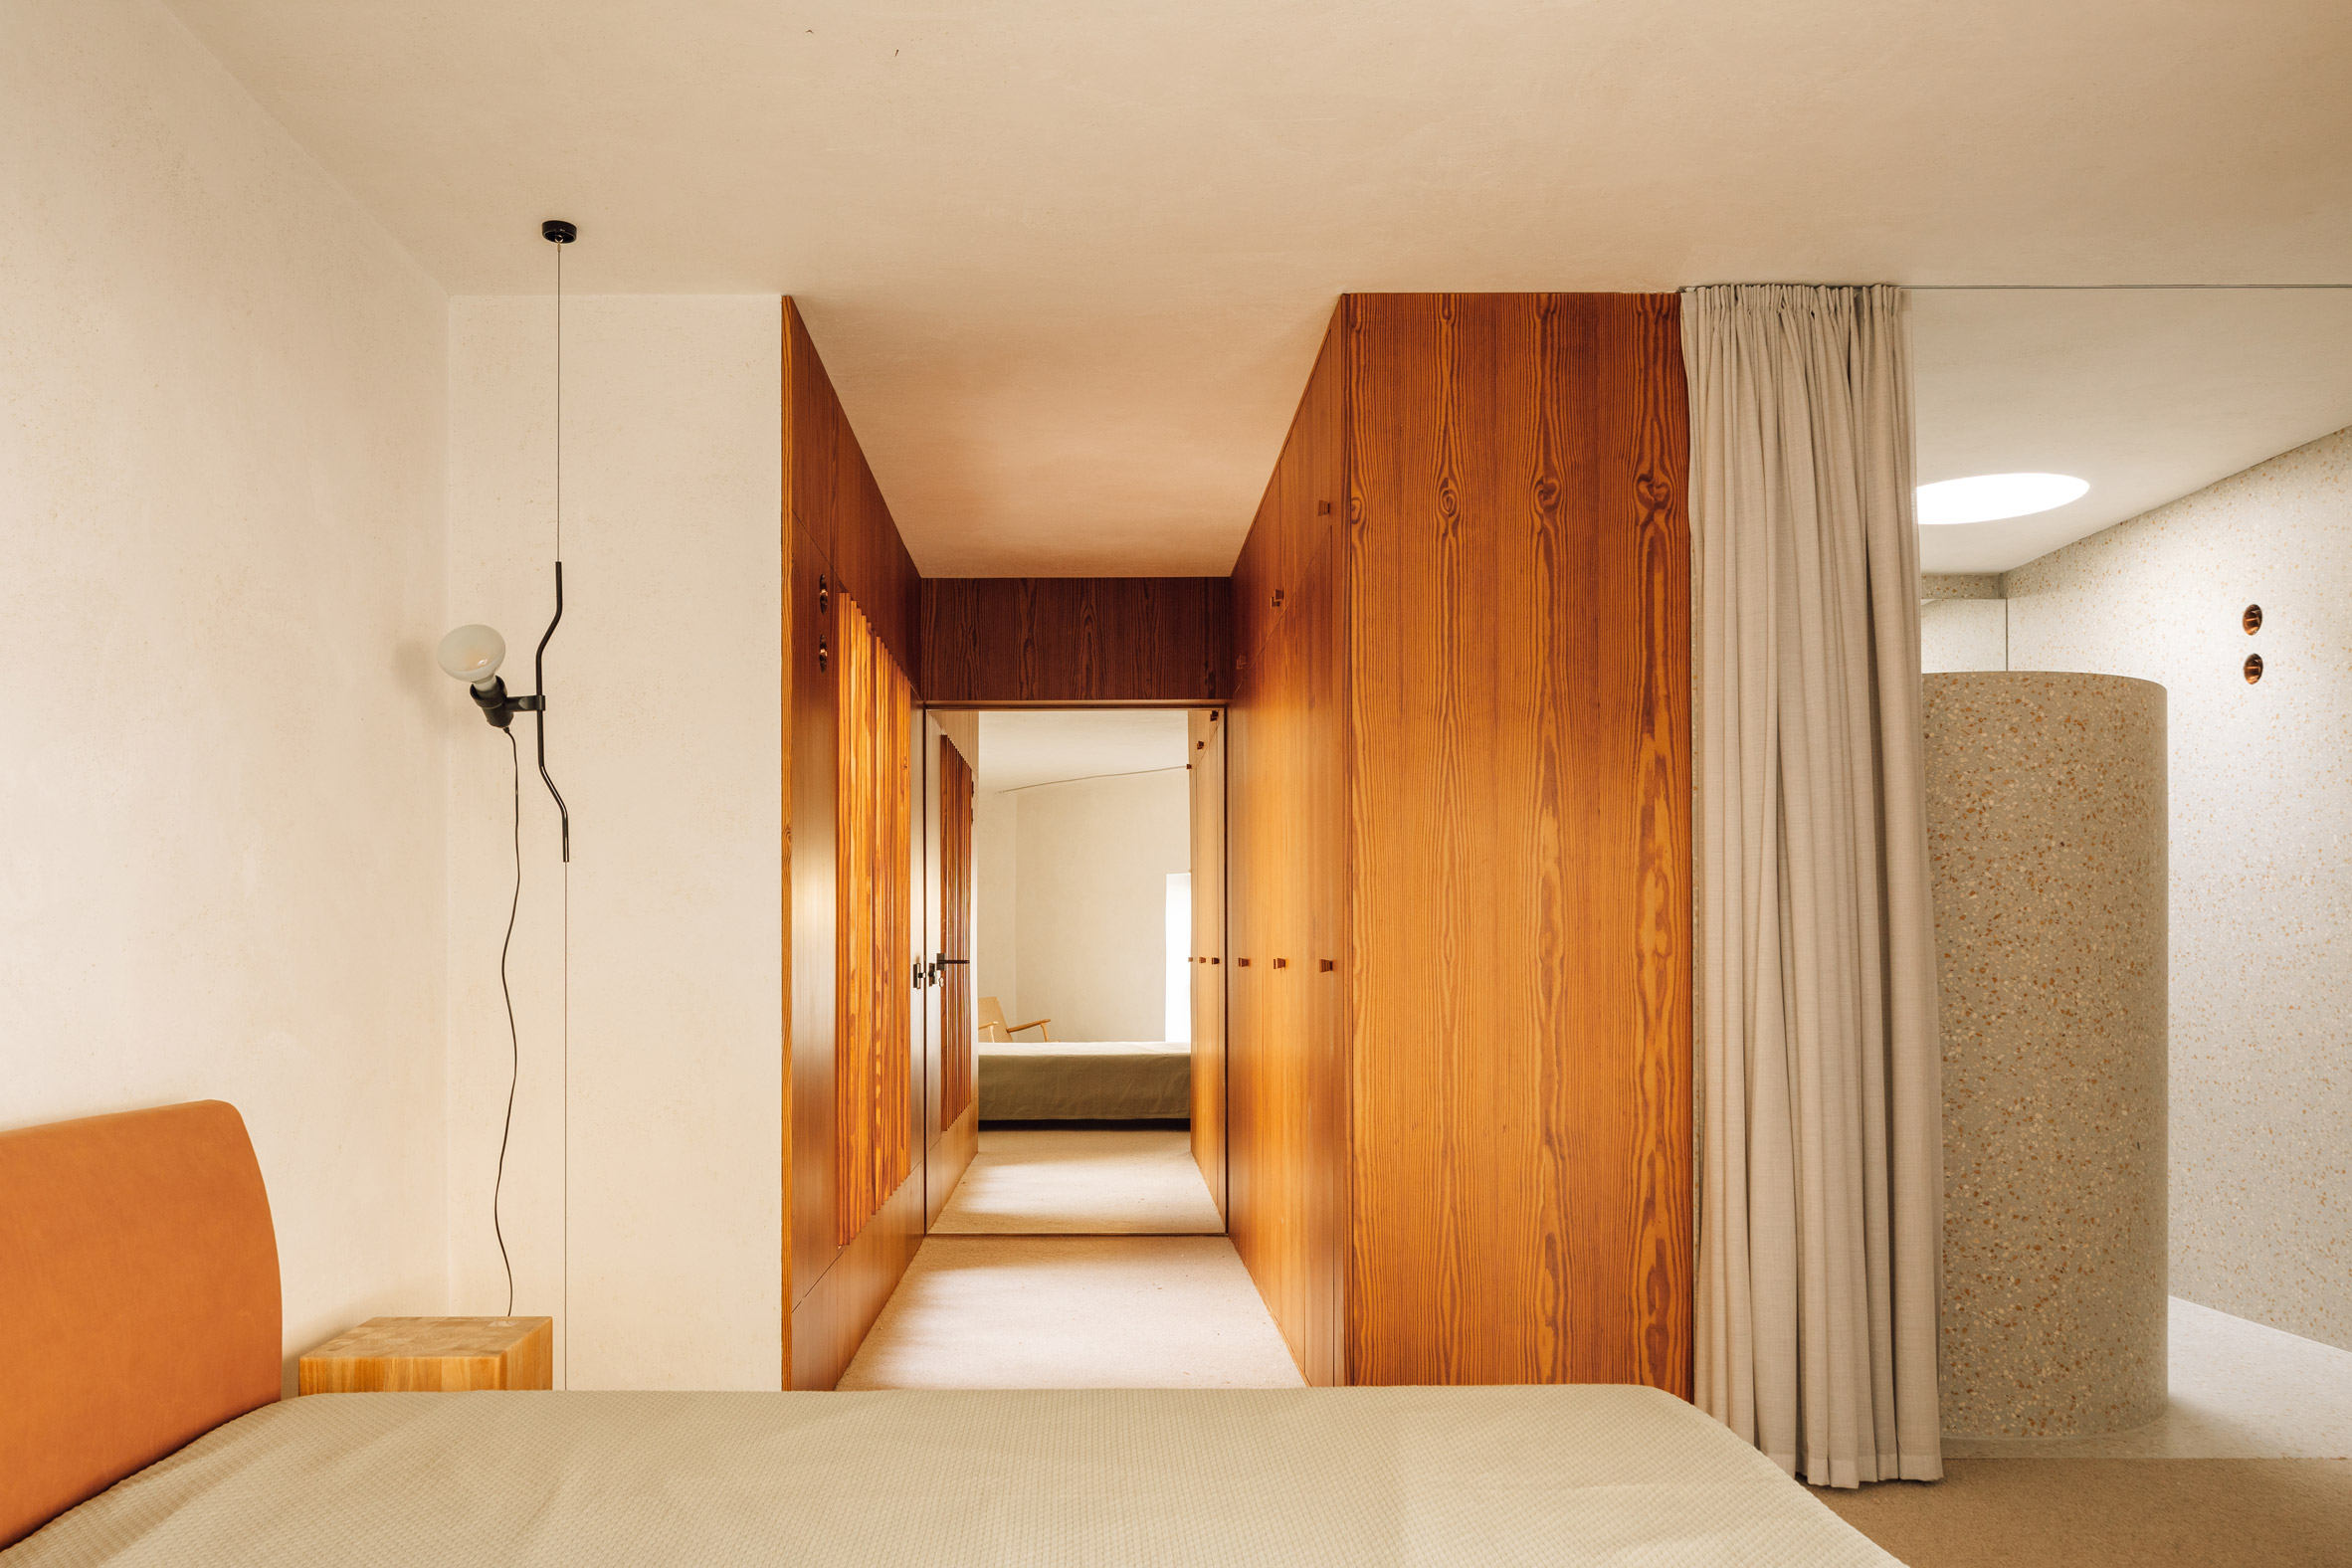 Interior view of a bedroom in garden annexe by Bak Gordon Arquitectos with built-in wooden wardrobes